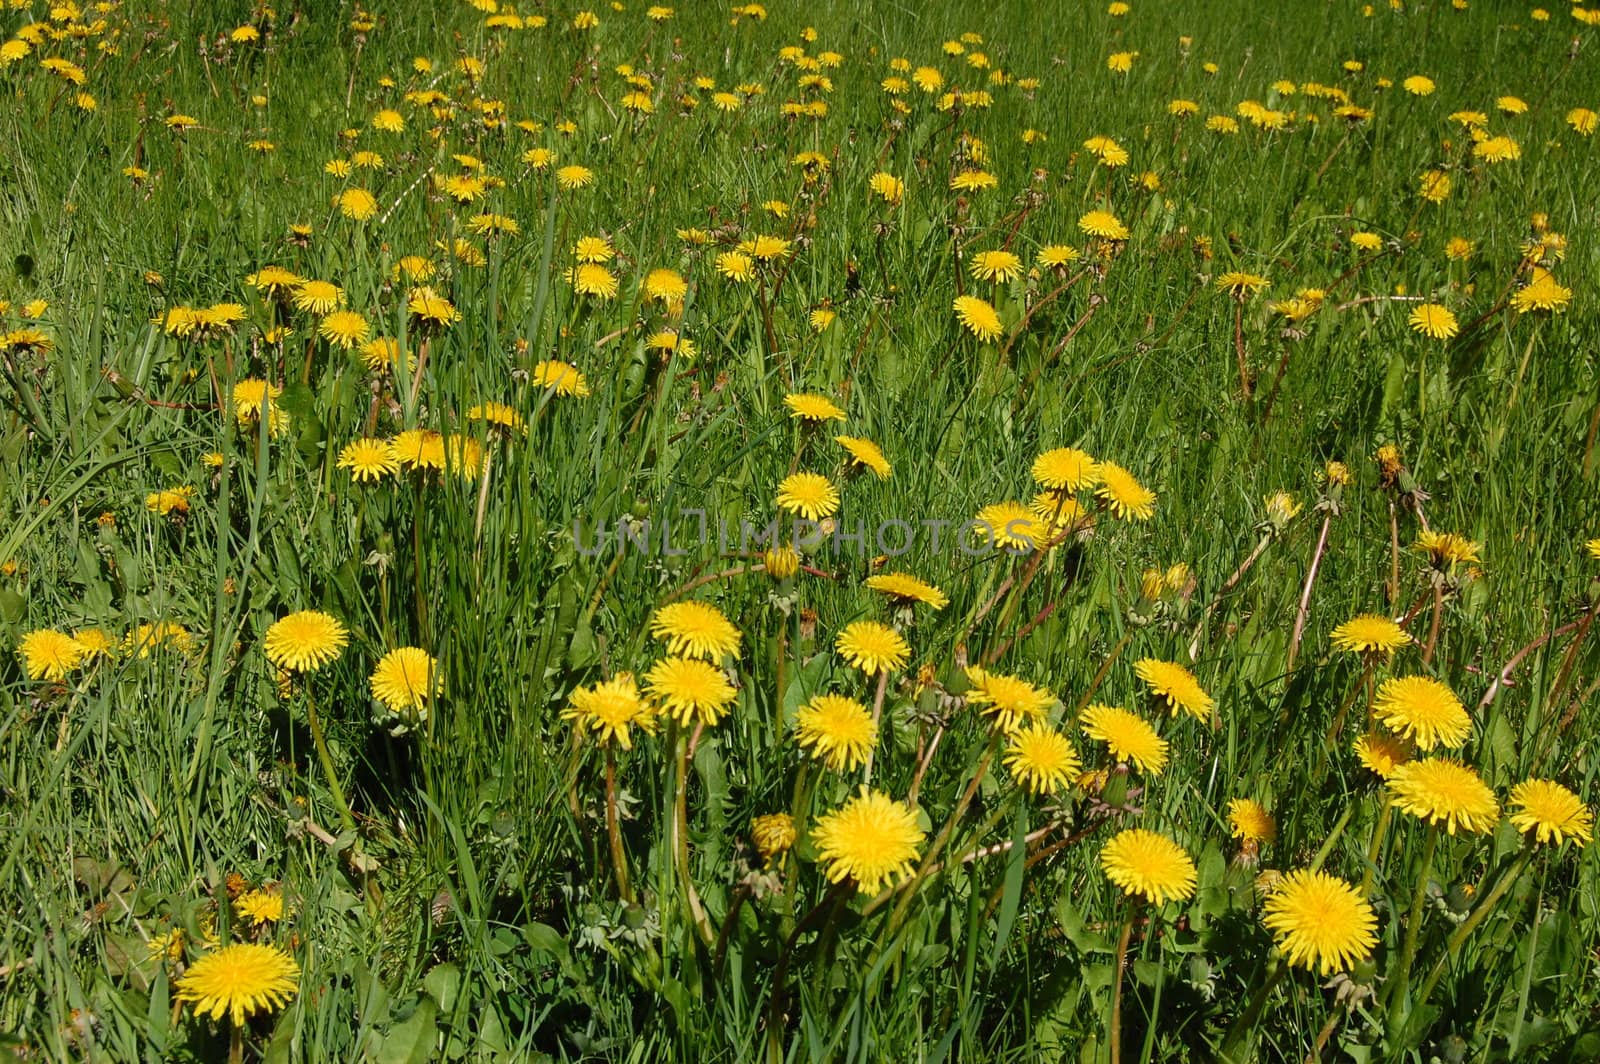 Dandelions on grass.